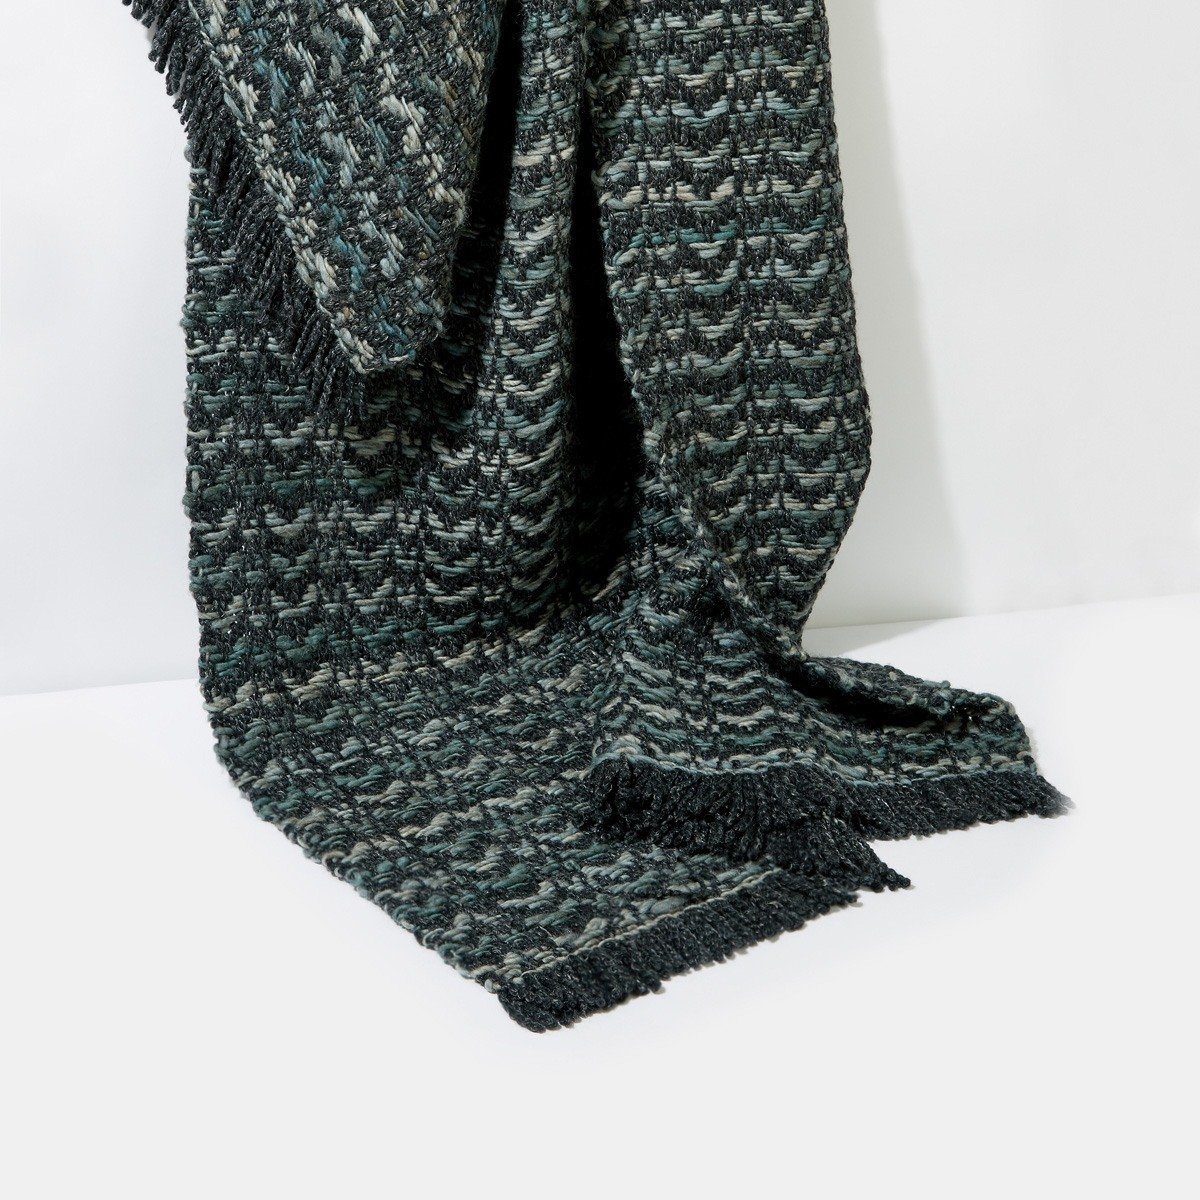 Lucilla Scarf Throw in Black / Grey – Luxury Marino Wool – Fairtrade & Sustainable – Alpaca & Hand Loomed – Aessai